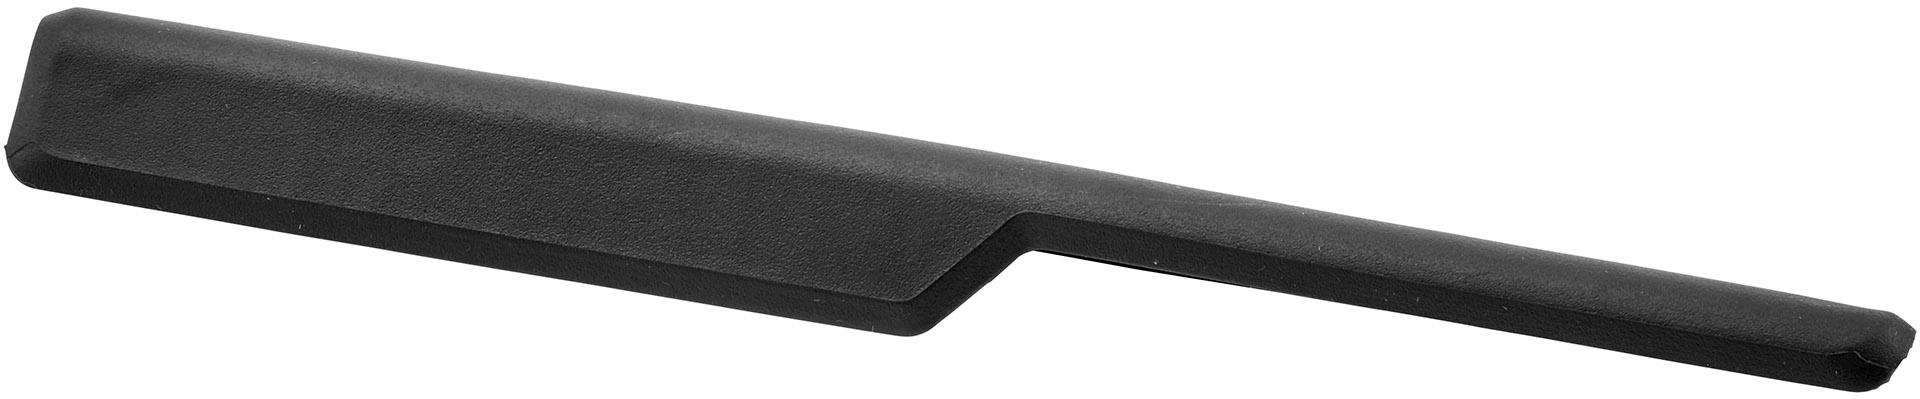 Nukeproof Mega Carbon Mtb Seatstay Protector  Neutral